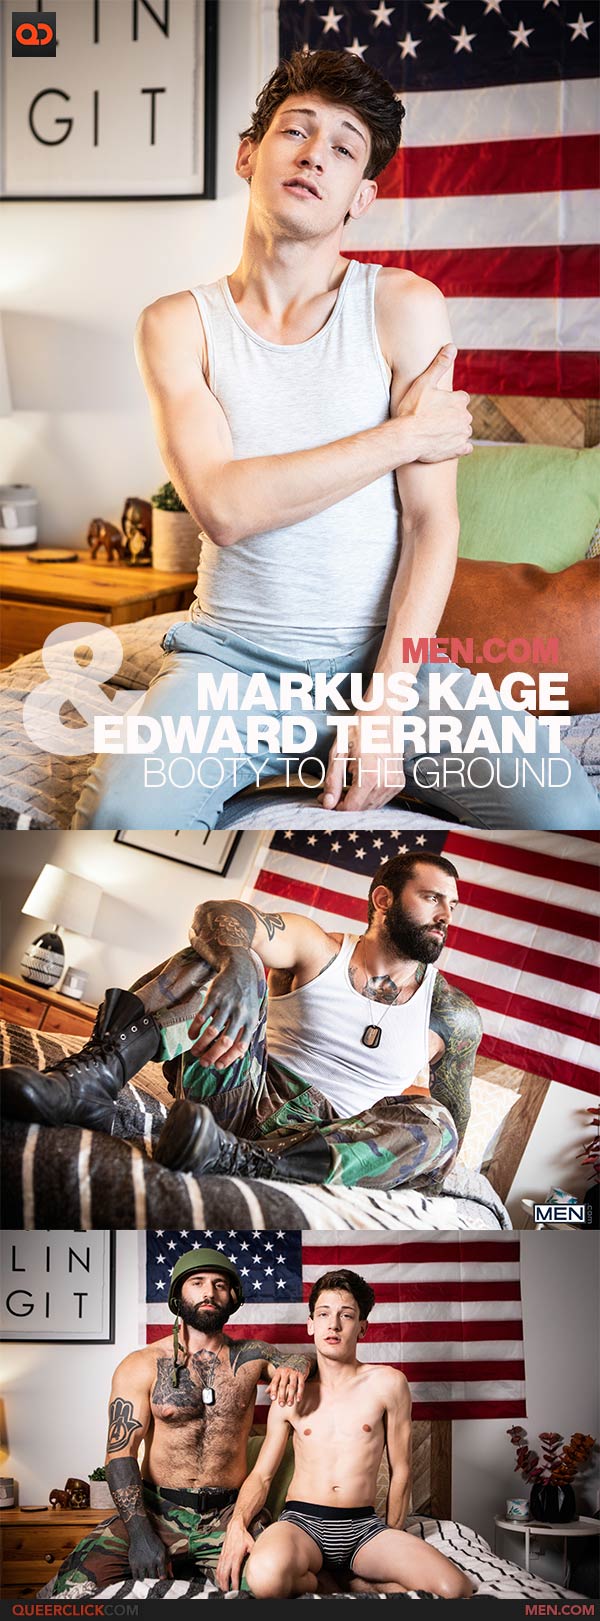 Men.com: Markus Kage and Edward Terrant